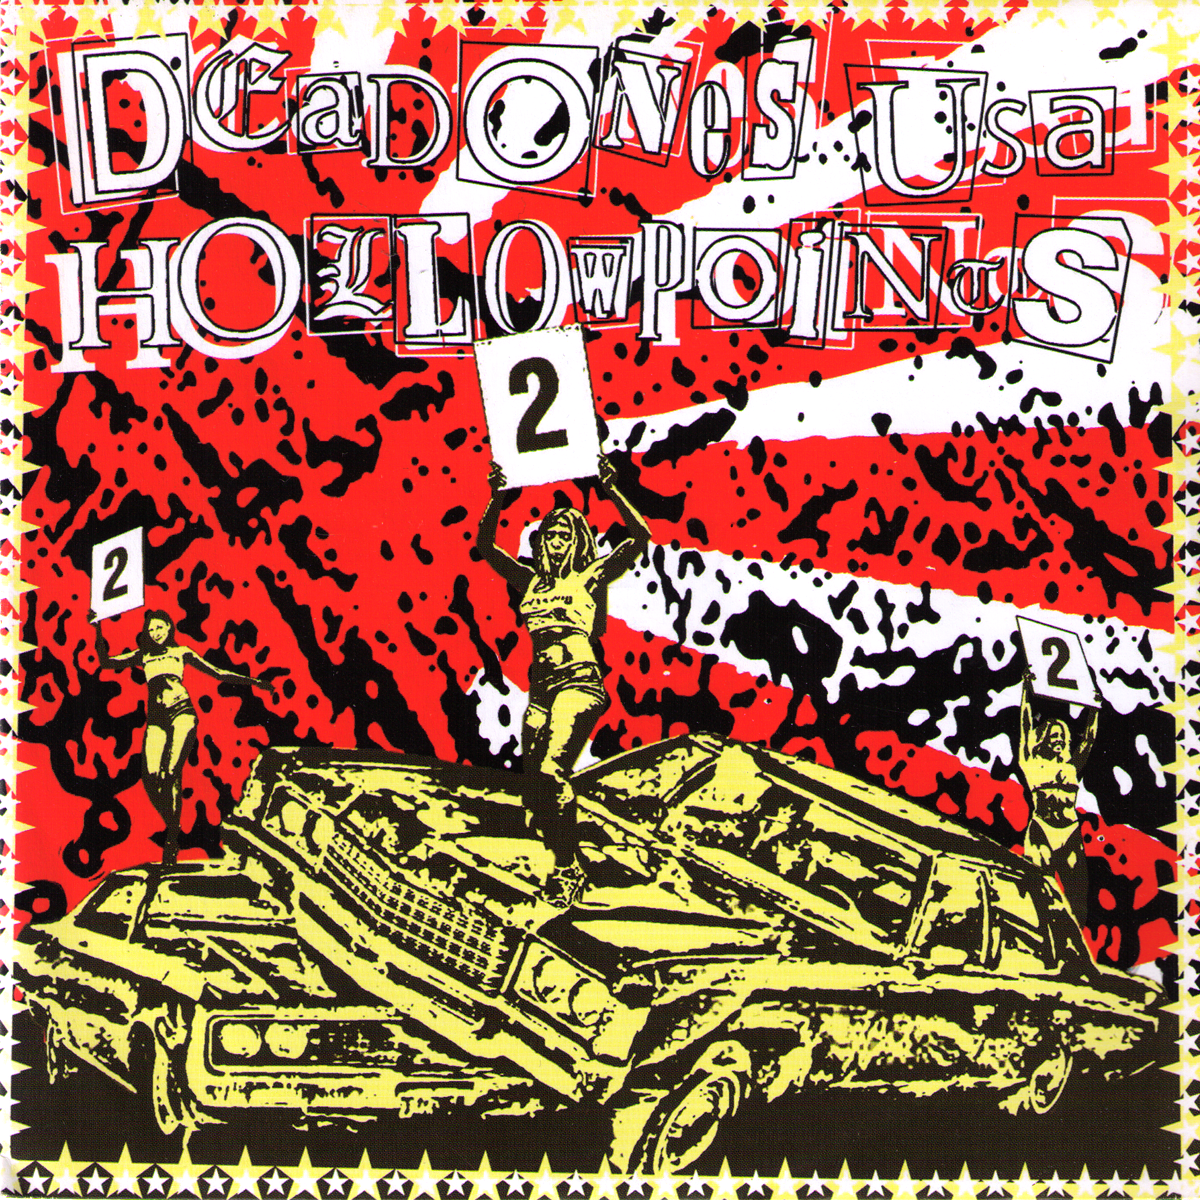 Dead Ones USA /Hollowpoints- Split 7” ~US BOMBS!